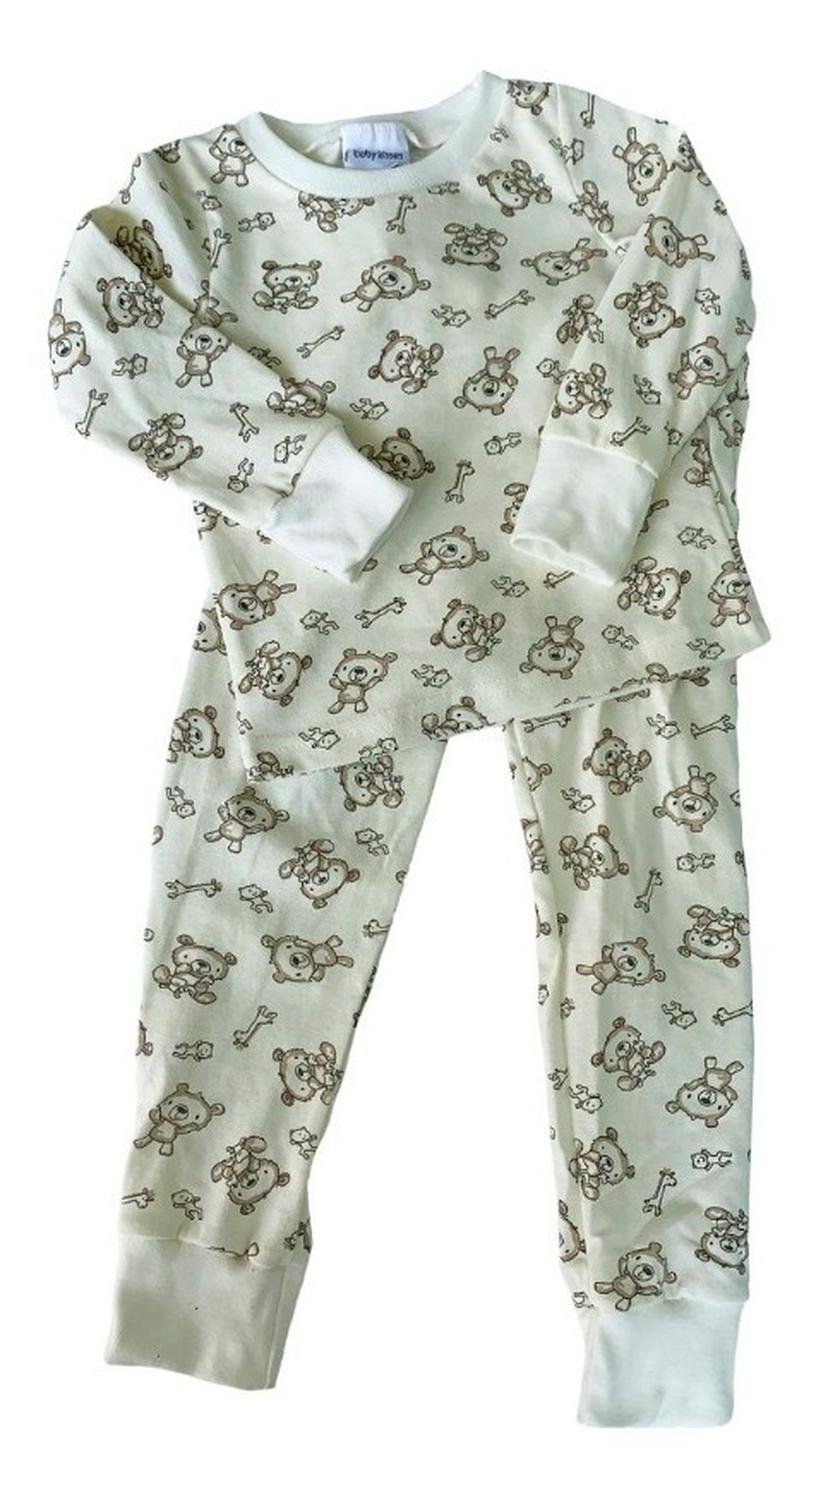 Kit 2 Pijamas Algodón Kiss para Niño con Pantalón Estampados Ositos, Perritos